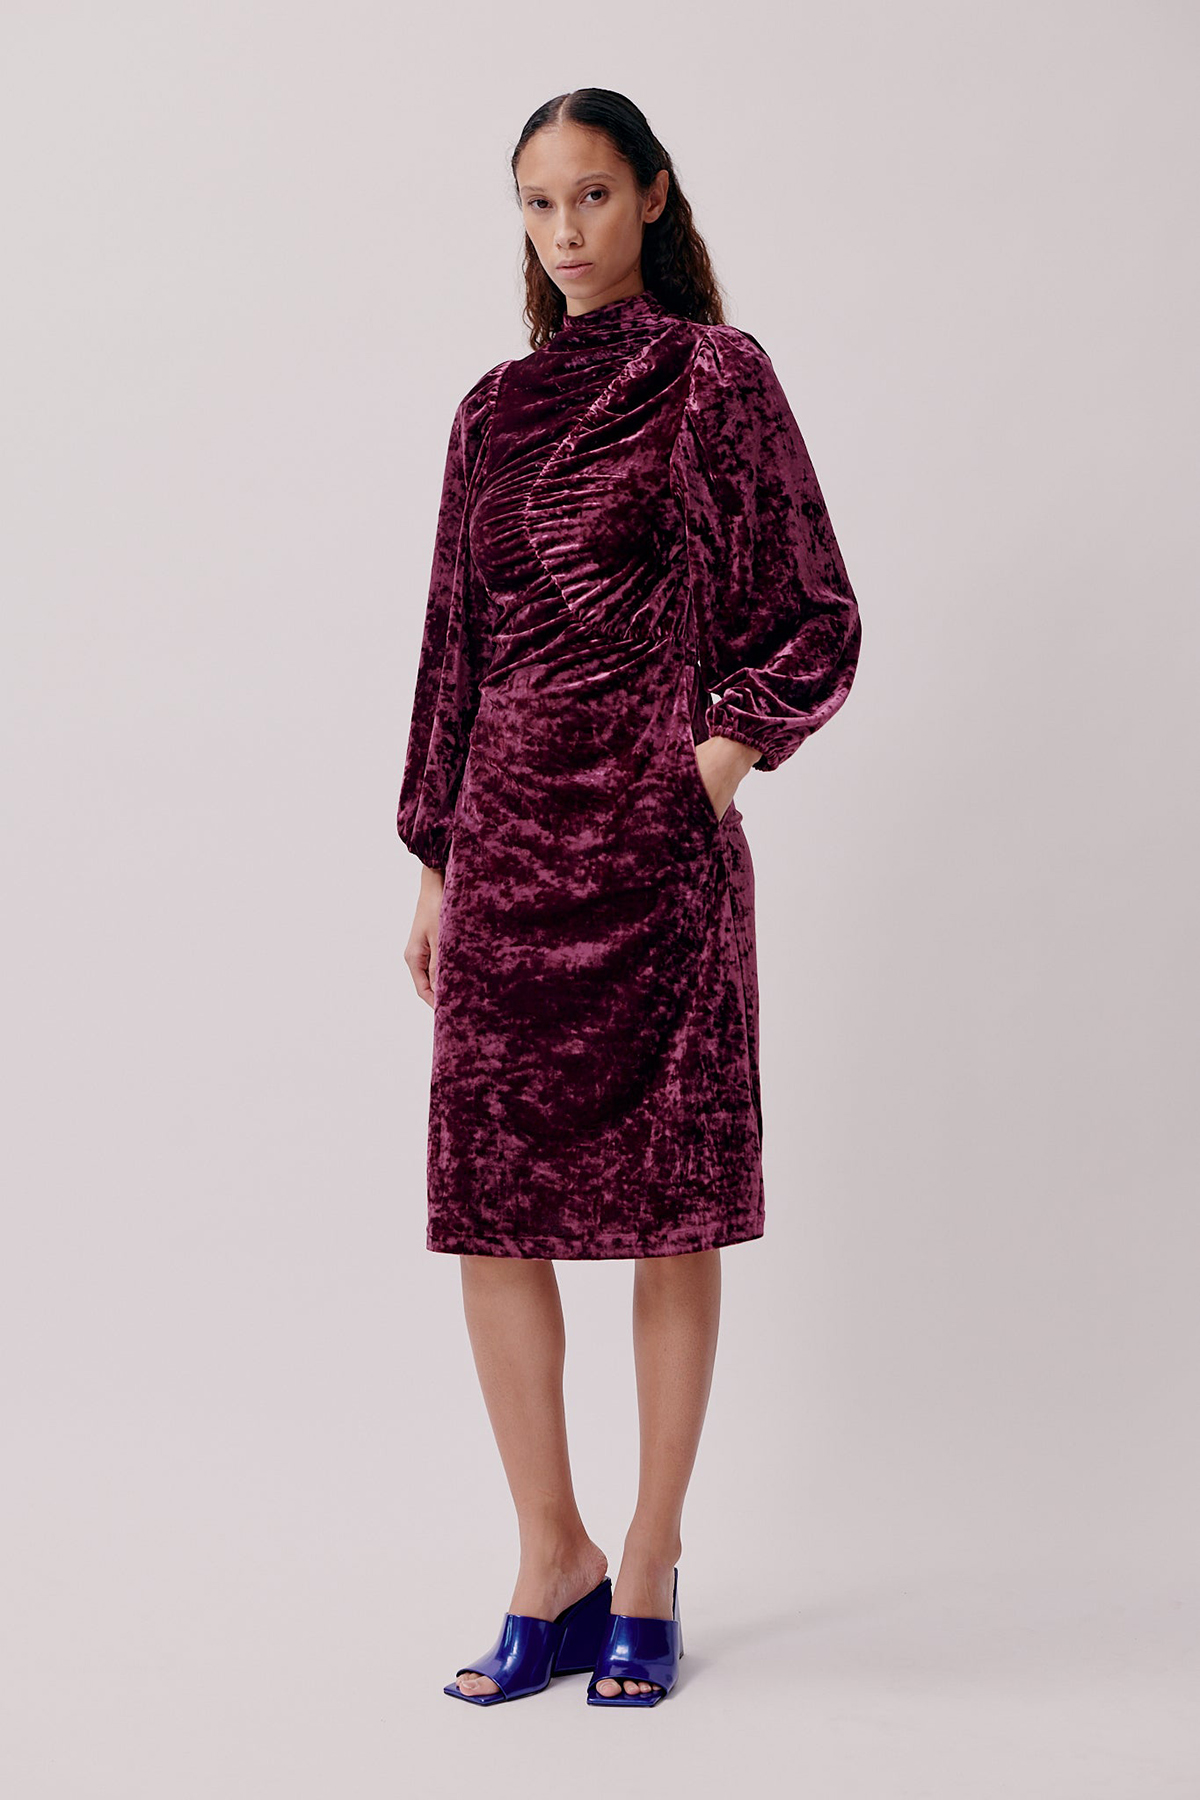 Hofmann Copenhagen Fabienne Dress - Ruby Star Velvet